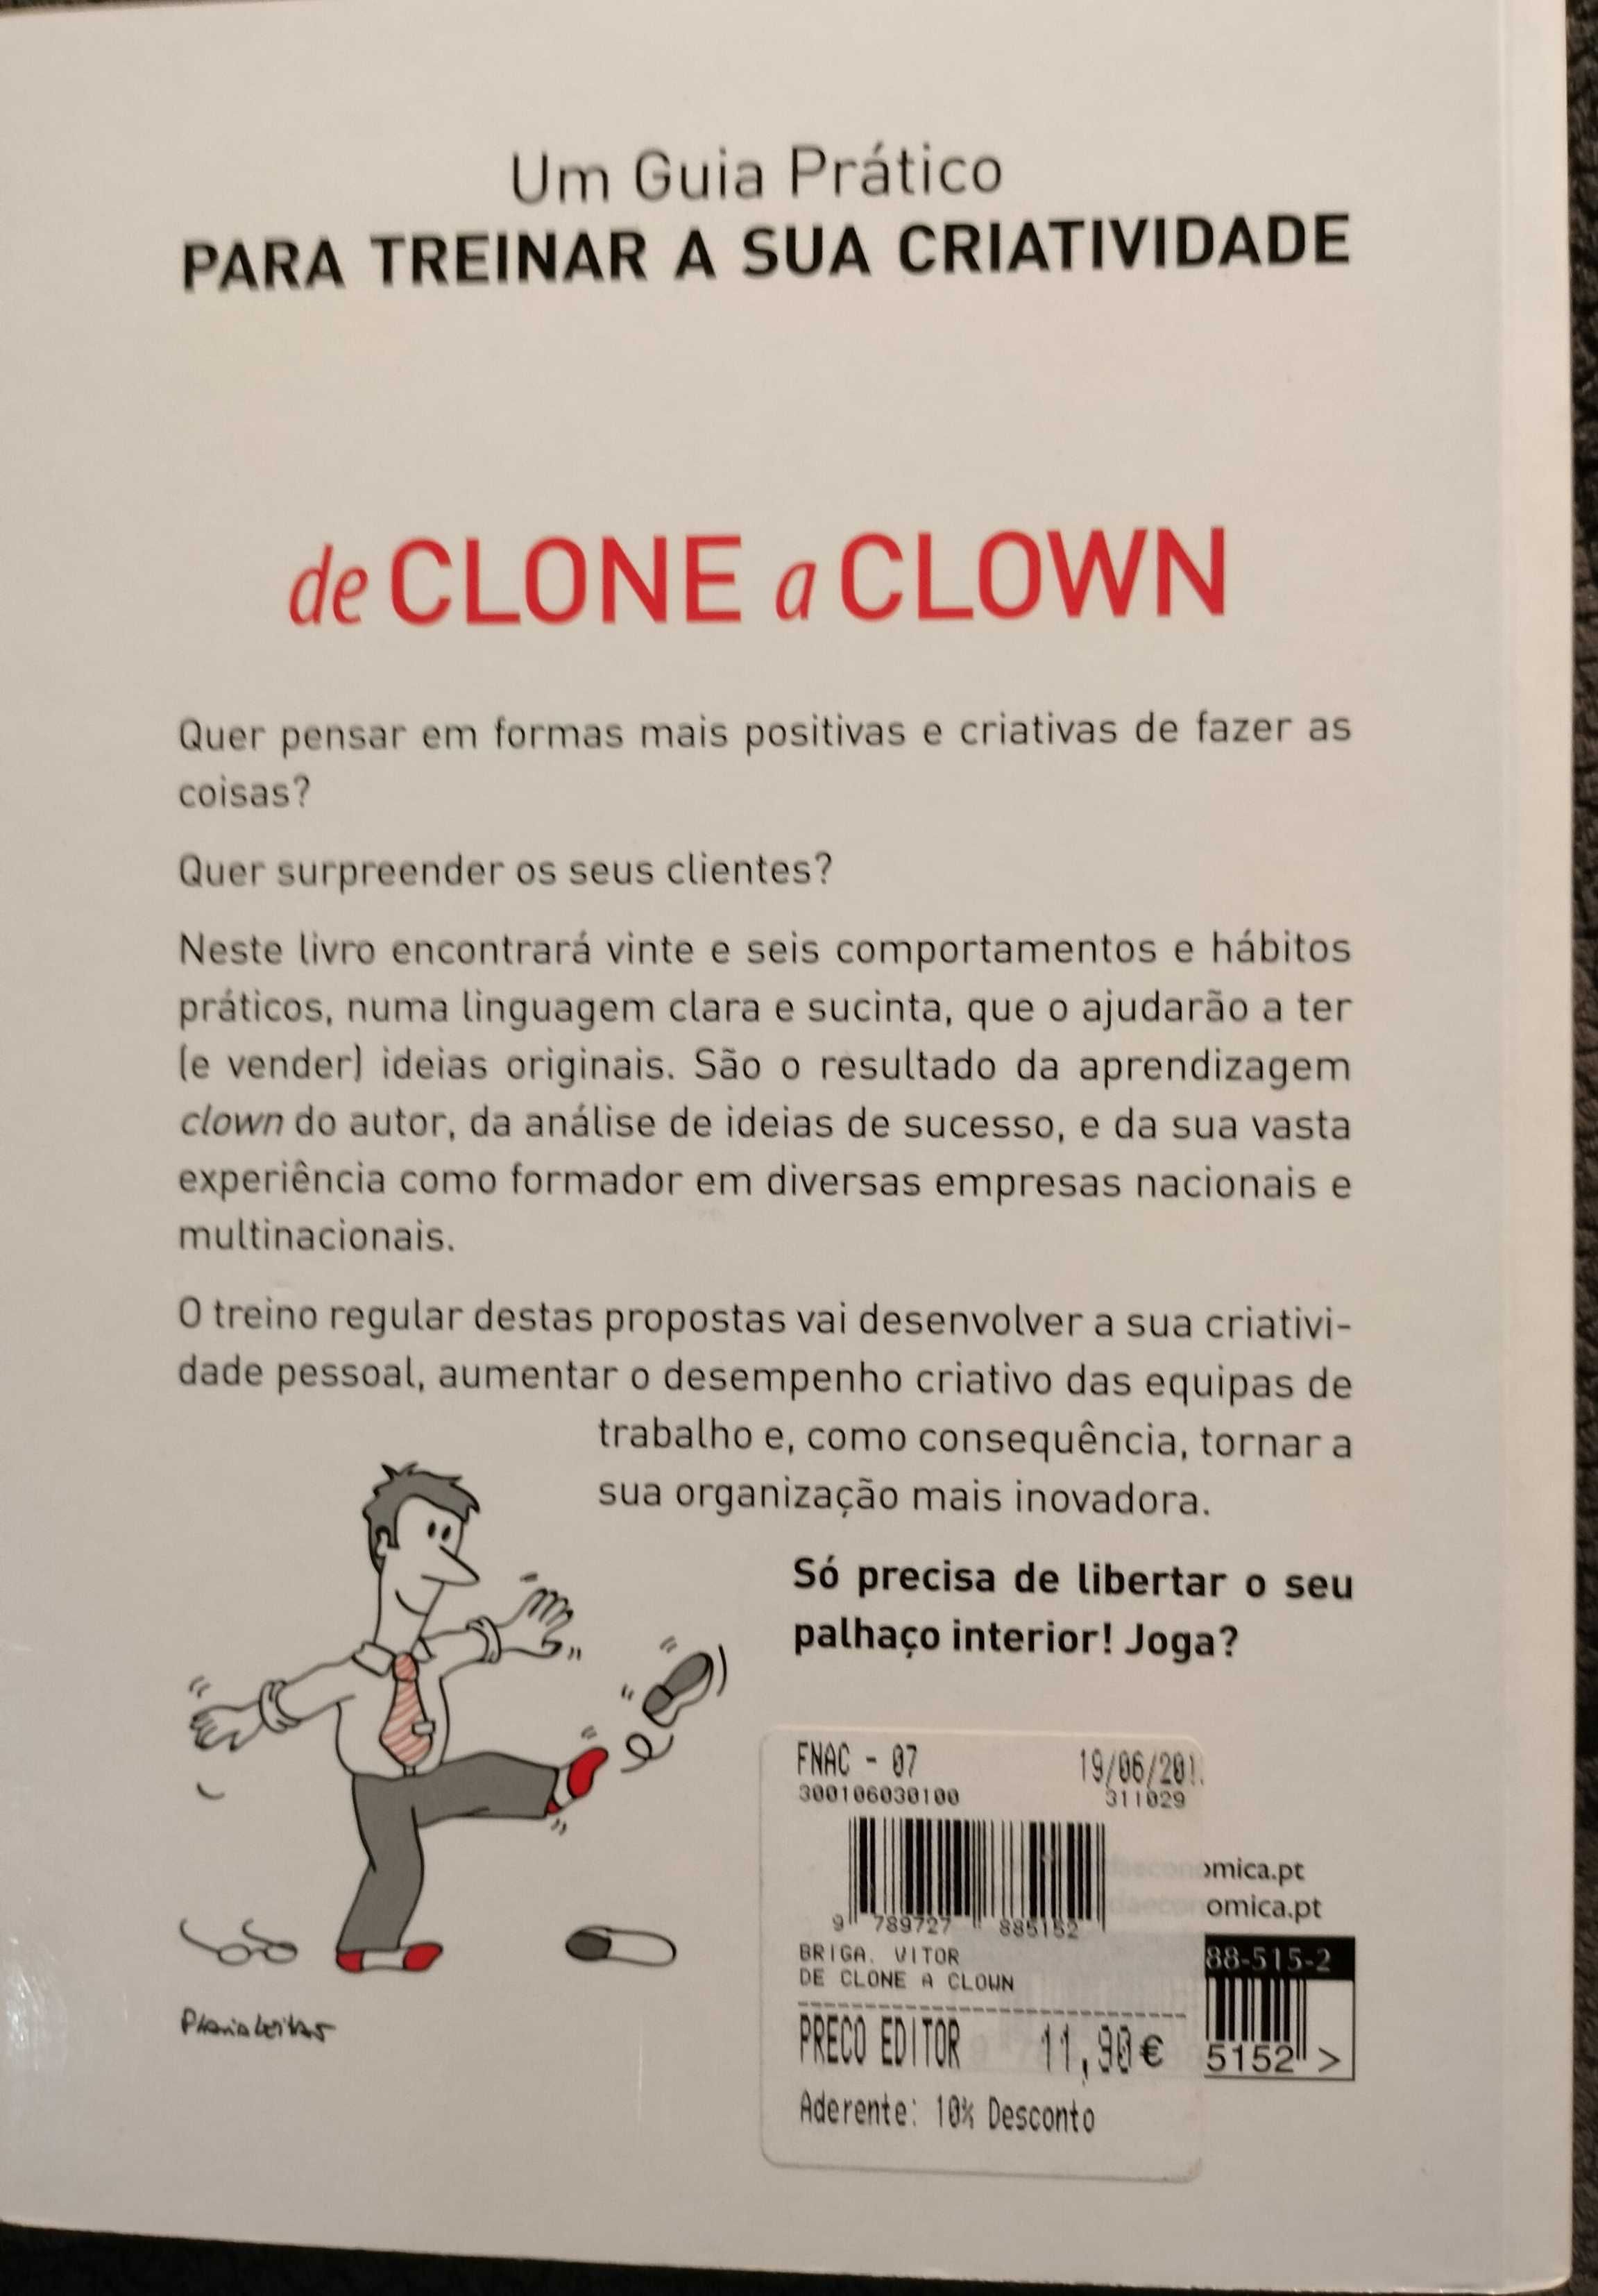 De clone a clown